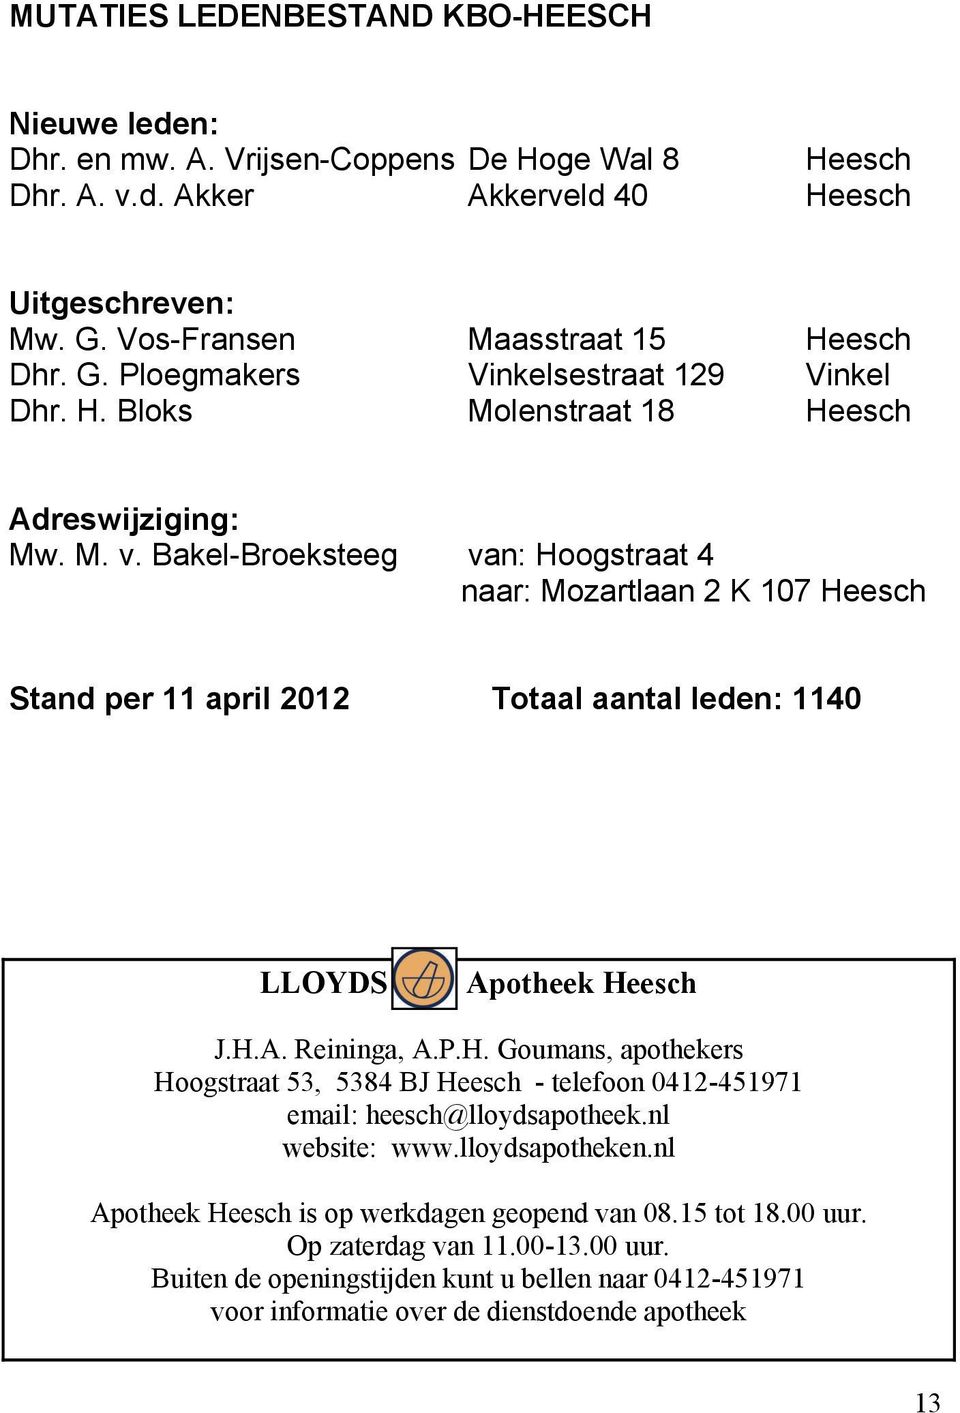 Bakel-Broeksteeg van: Hoogstraat 4 naar: Mozartlaan 2 K 107 Heesch Stand per 11 april 2012 Totaal aantal leden: 1140 LLOYDS Apotheek Heesch J.H.A. Reininga, A.P.H. Goumans, apothekers Hoogstraat 53, 5384 BJ Heesch - telefoon 0412-451971 email: heesch@lloydsapotheek.